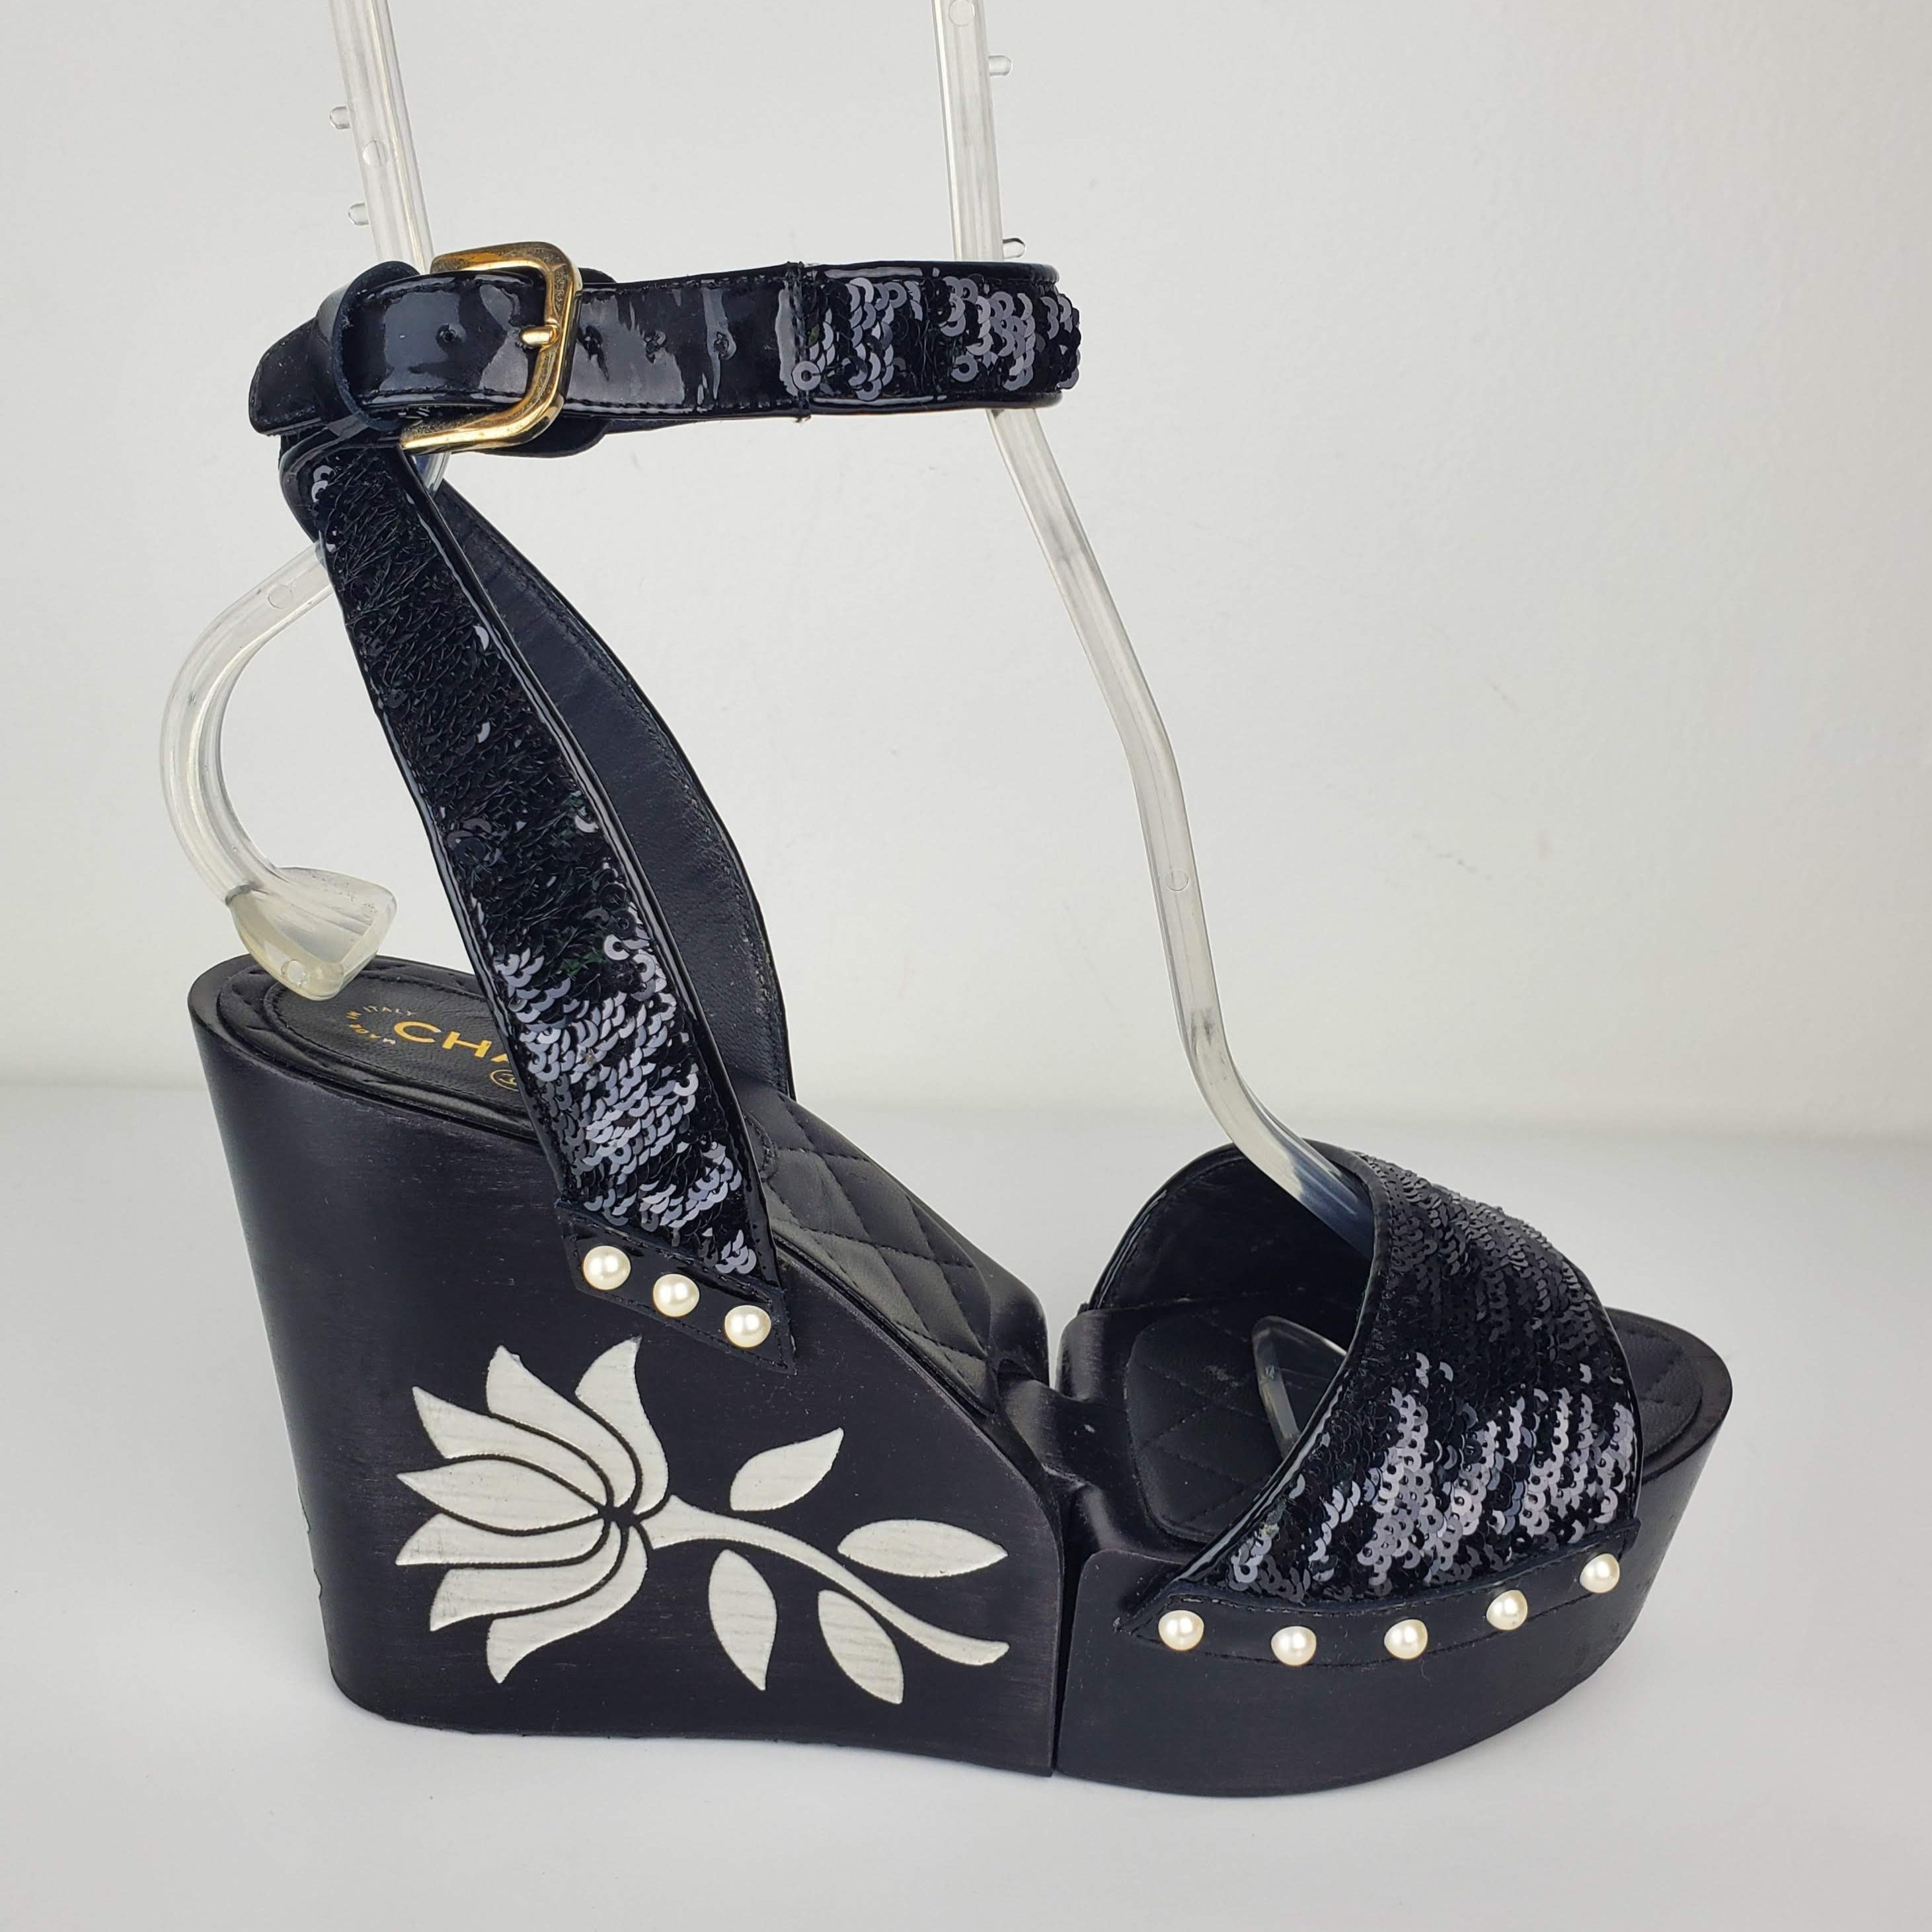 Black Gold Crisscross Strappy Platforms Weird Heels Wedges Sandals Shoes